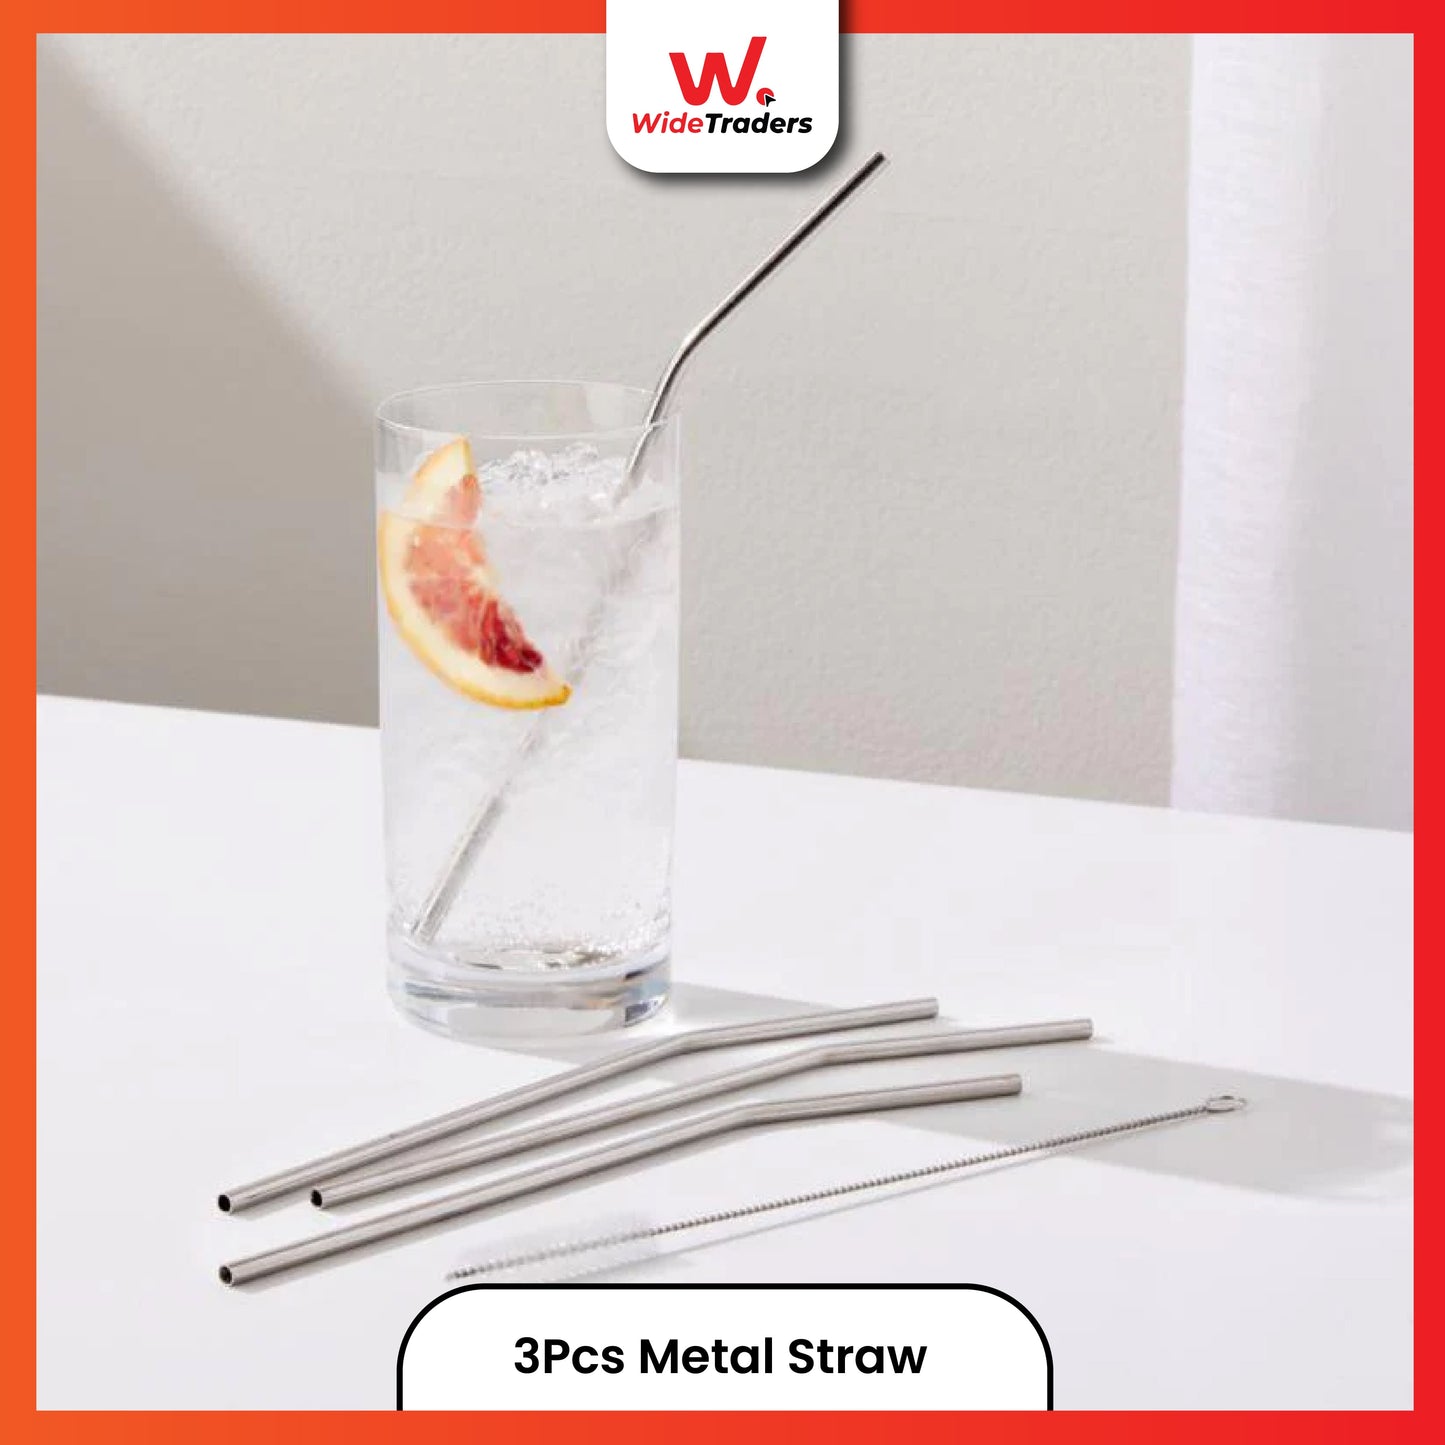 3Pcs Stainless Steel Metal Drinking Straw Reusable Straws + Cleaner Brush